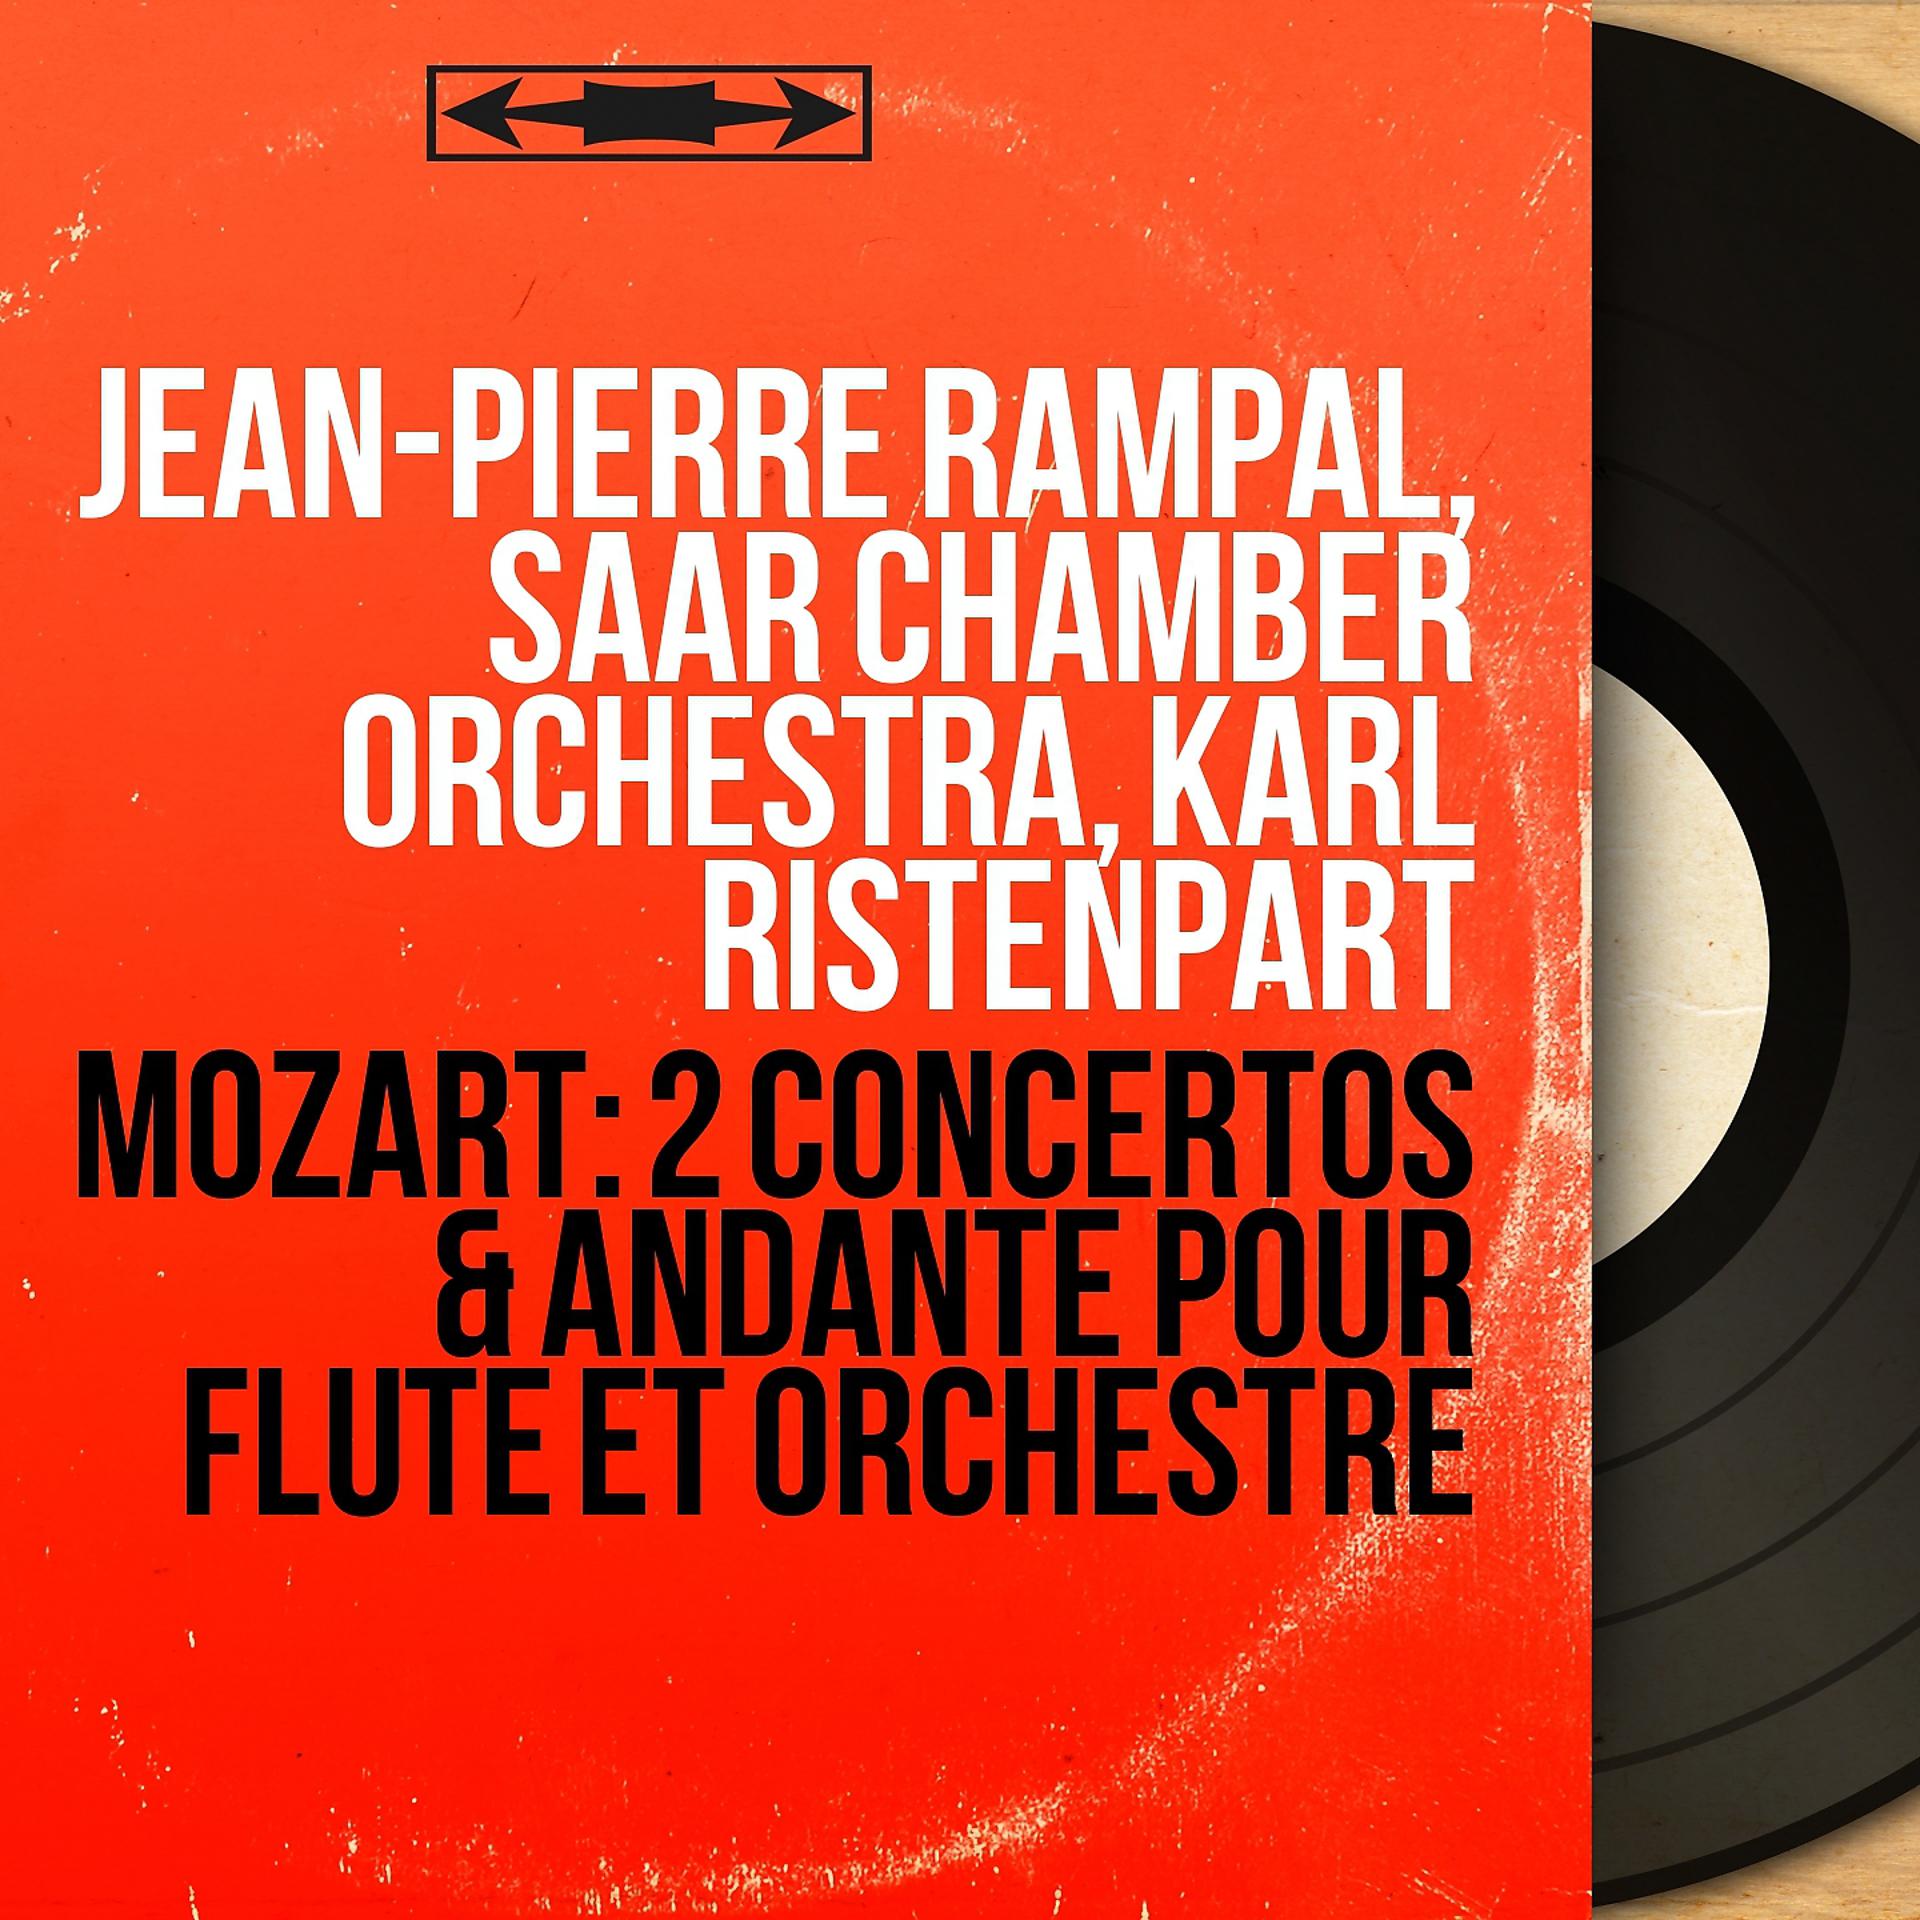 Постер к треку Jean-Pierre Rampal, Saar Chamber Orchestra, Karl Ristenpart - Flute Concerto in D Major, K. 314: I. Allegro